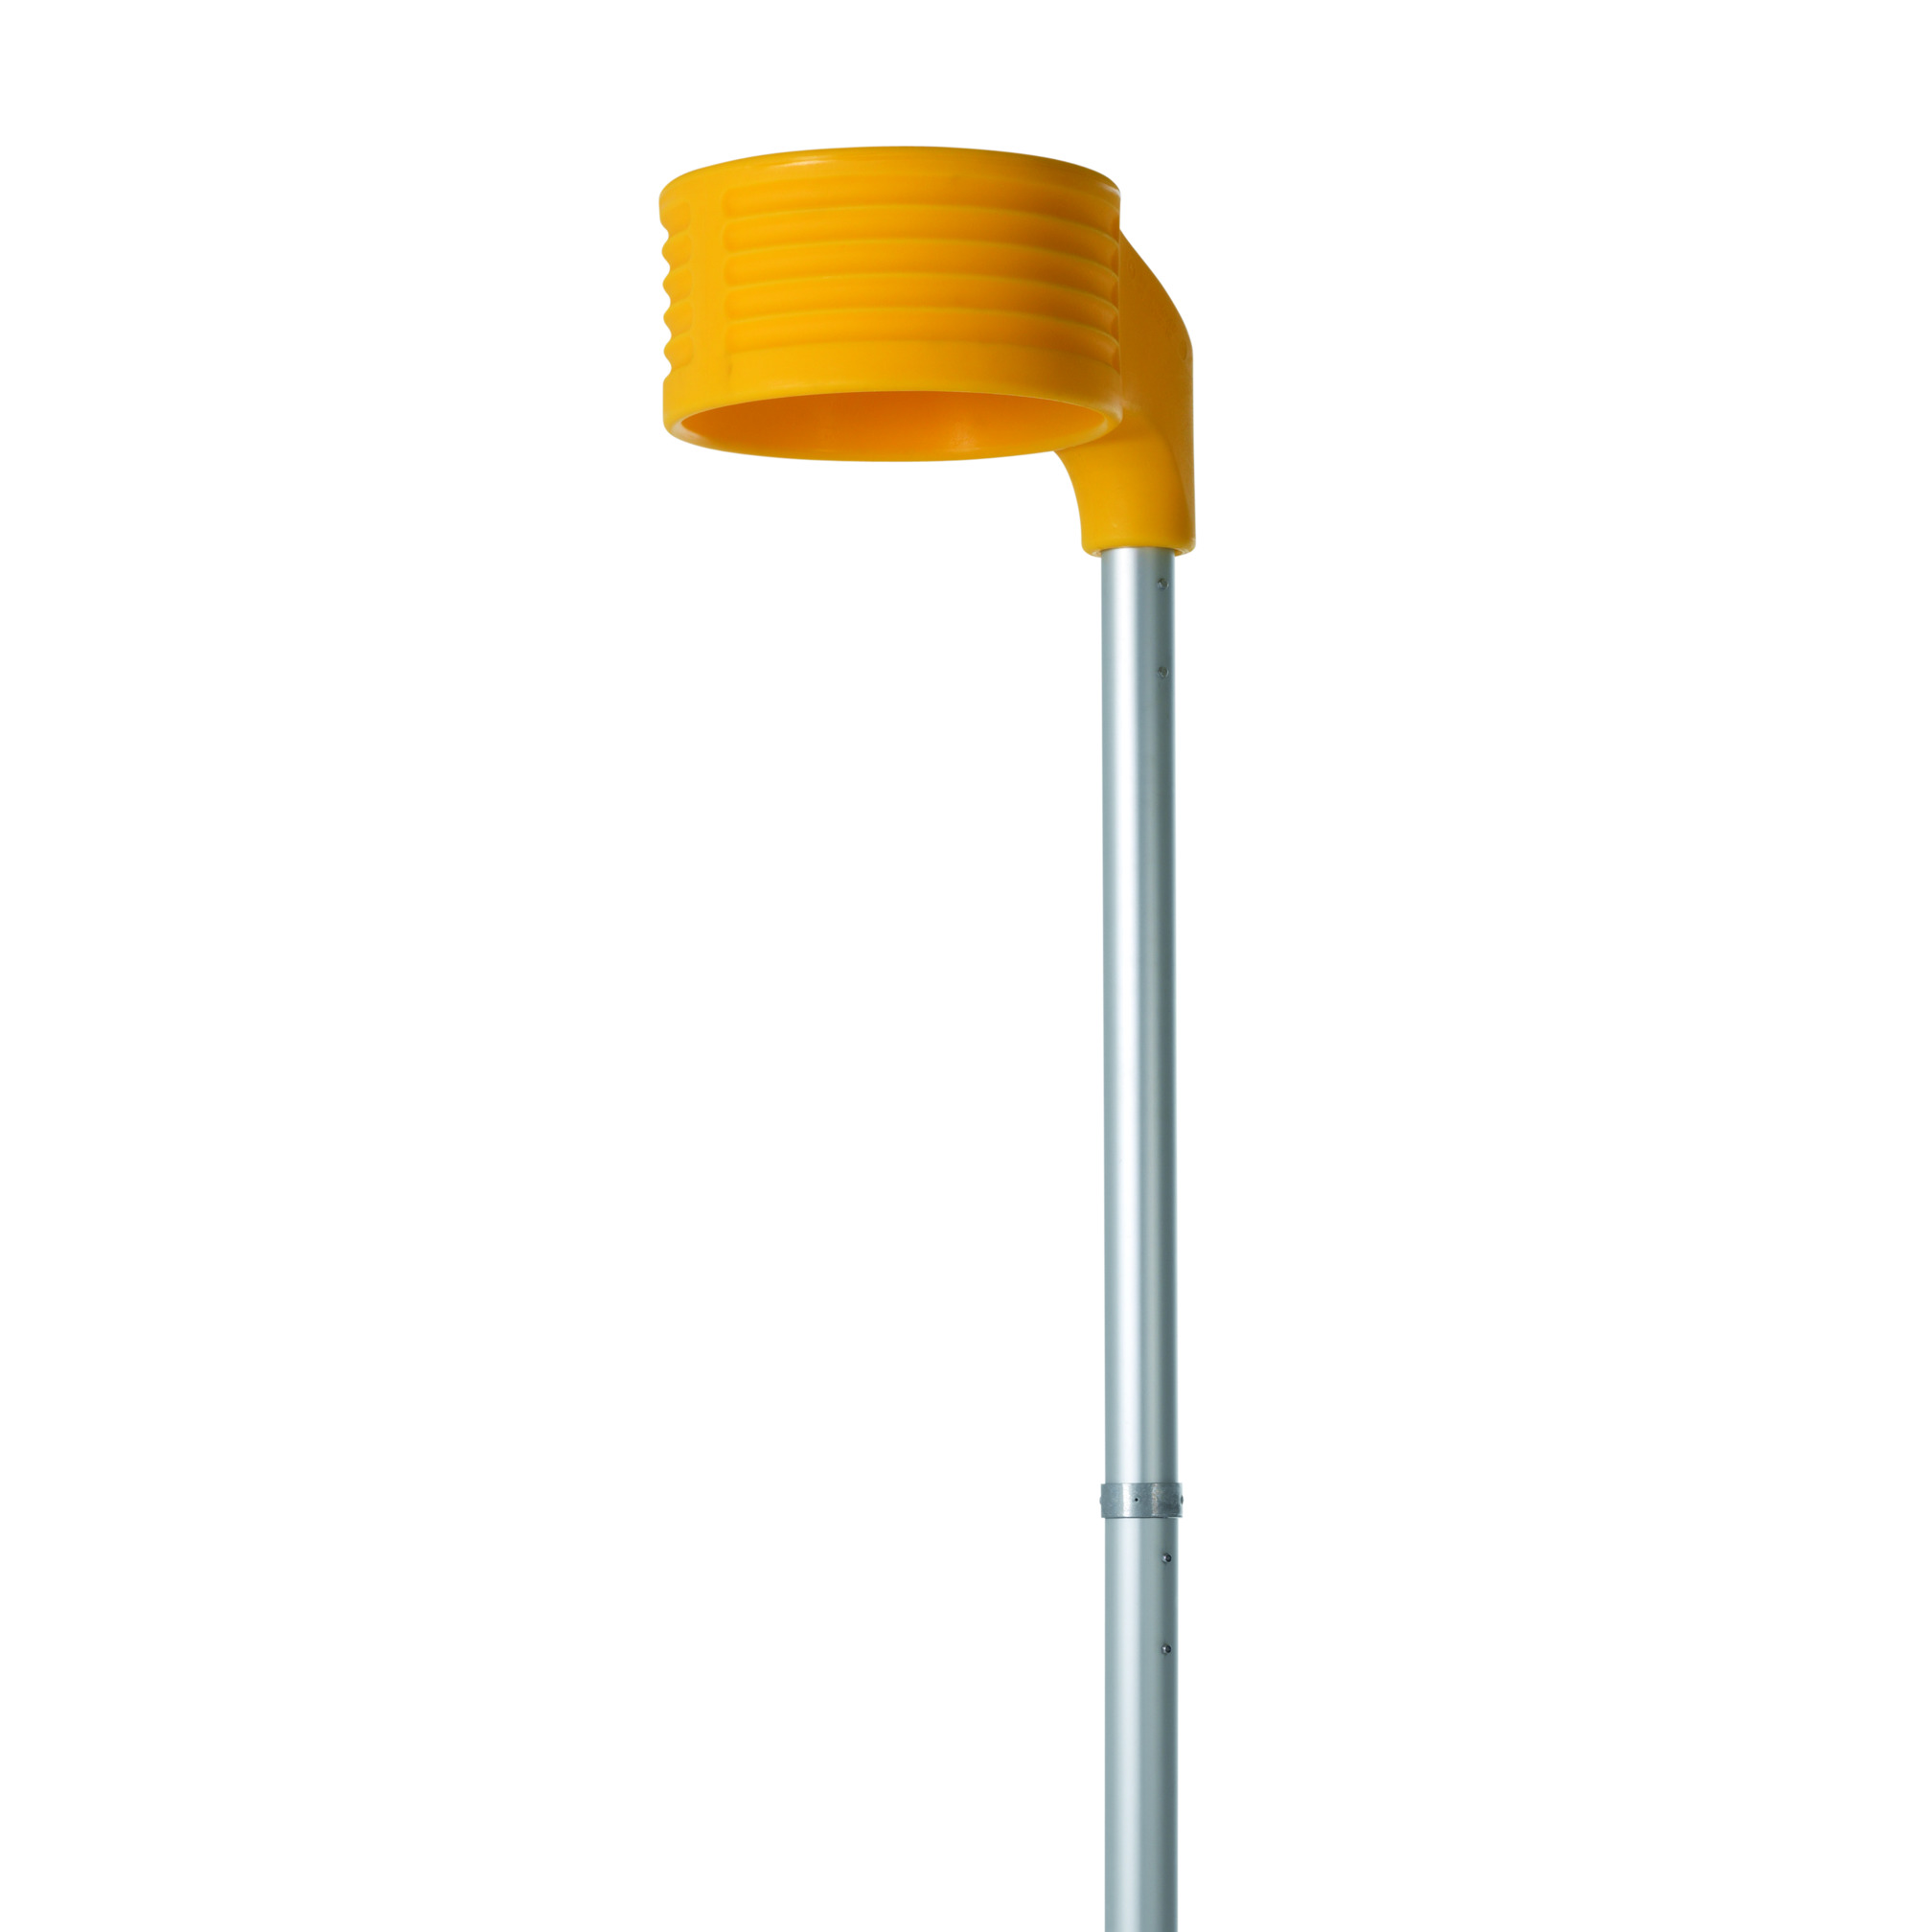 Modular korfball post, extension piece 100 cm